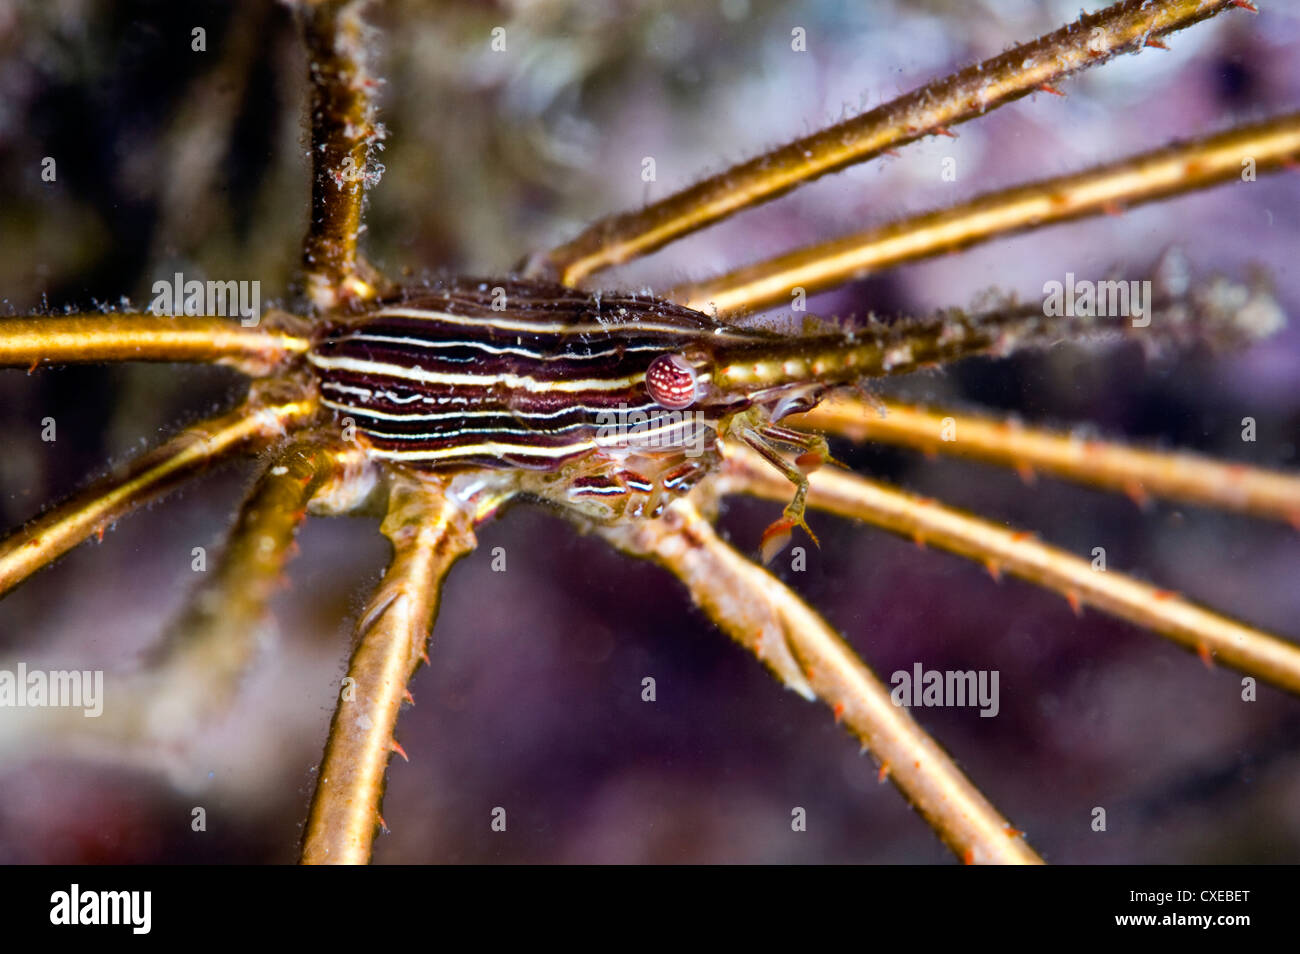 Yellowline arrow crab (Stenorhynchus seticornis), St. Lucia, West Indies, Caribbean, Central America Stock Photo